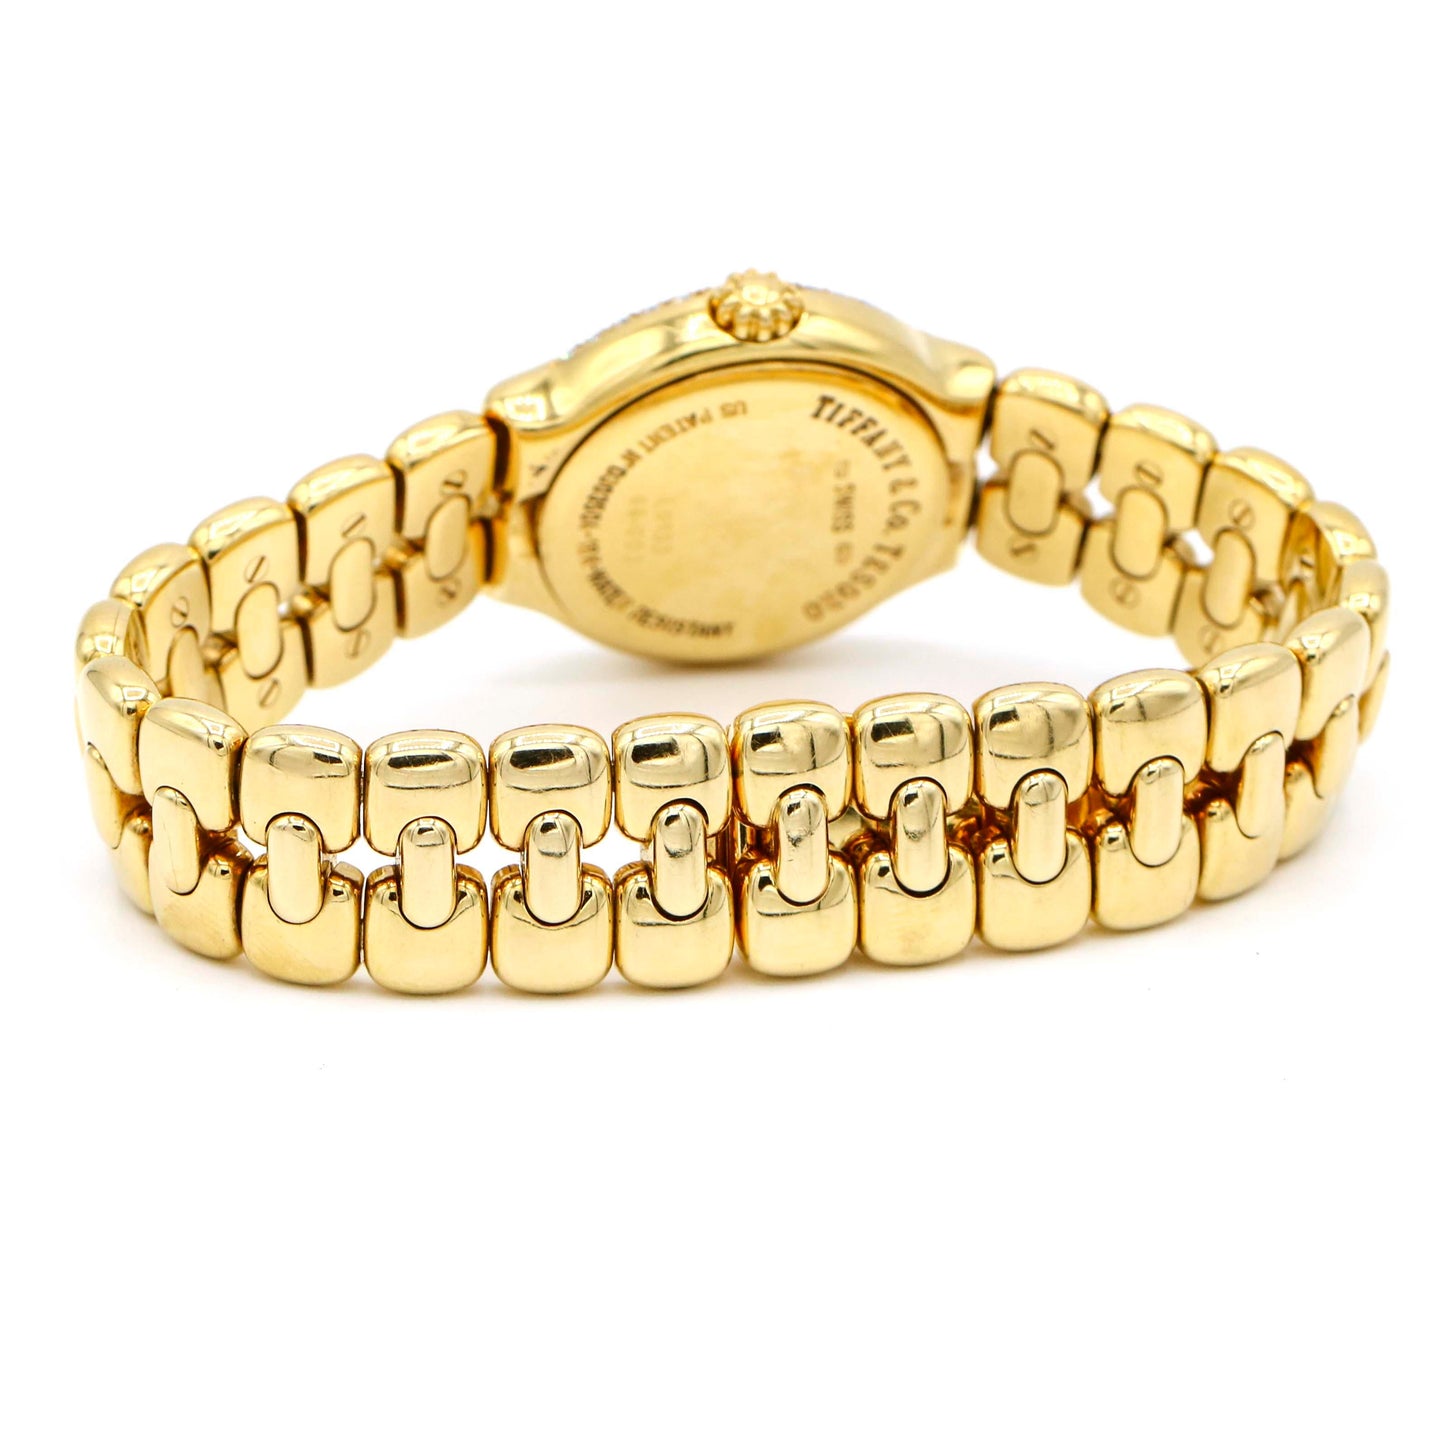 Tiffany & Co. Ladies 18k Gold Tesoro Watch with Diamond Bezel and Dial - 31 Jewels Inc.